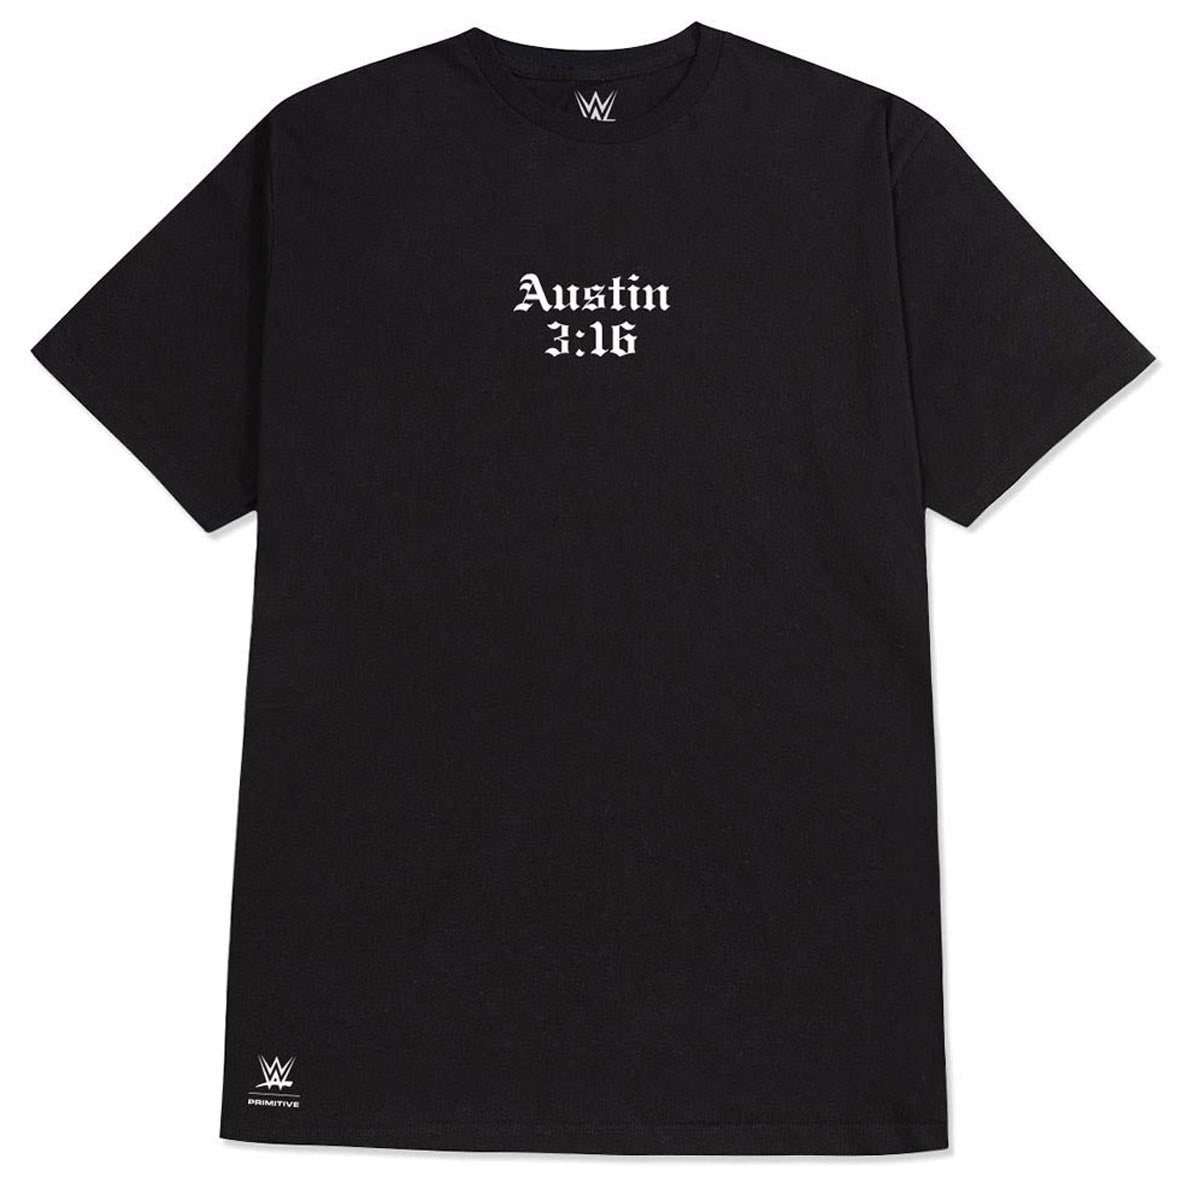 Primitive x WWE Austin Chrome T-Shirt - Black image 2